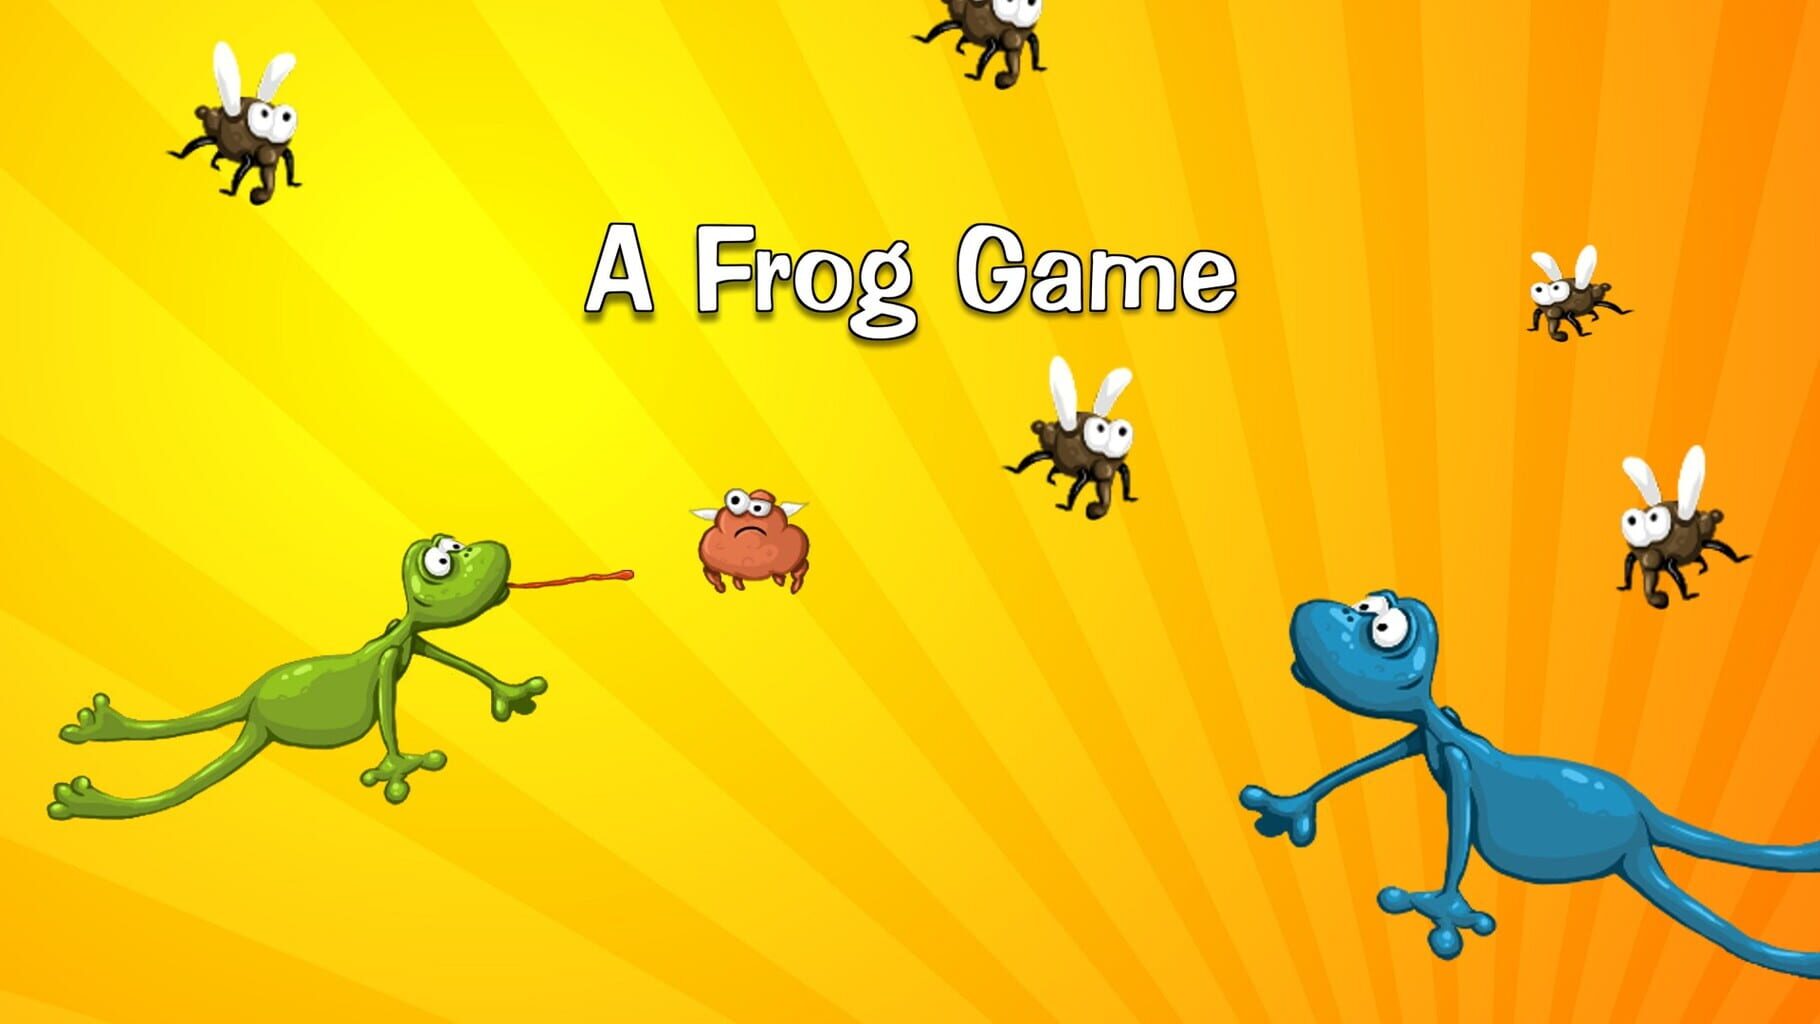 A Frog Game artwork